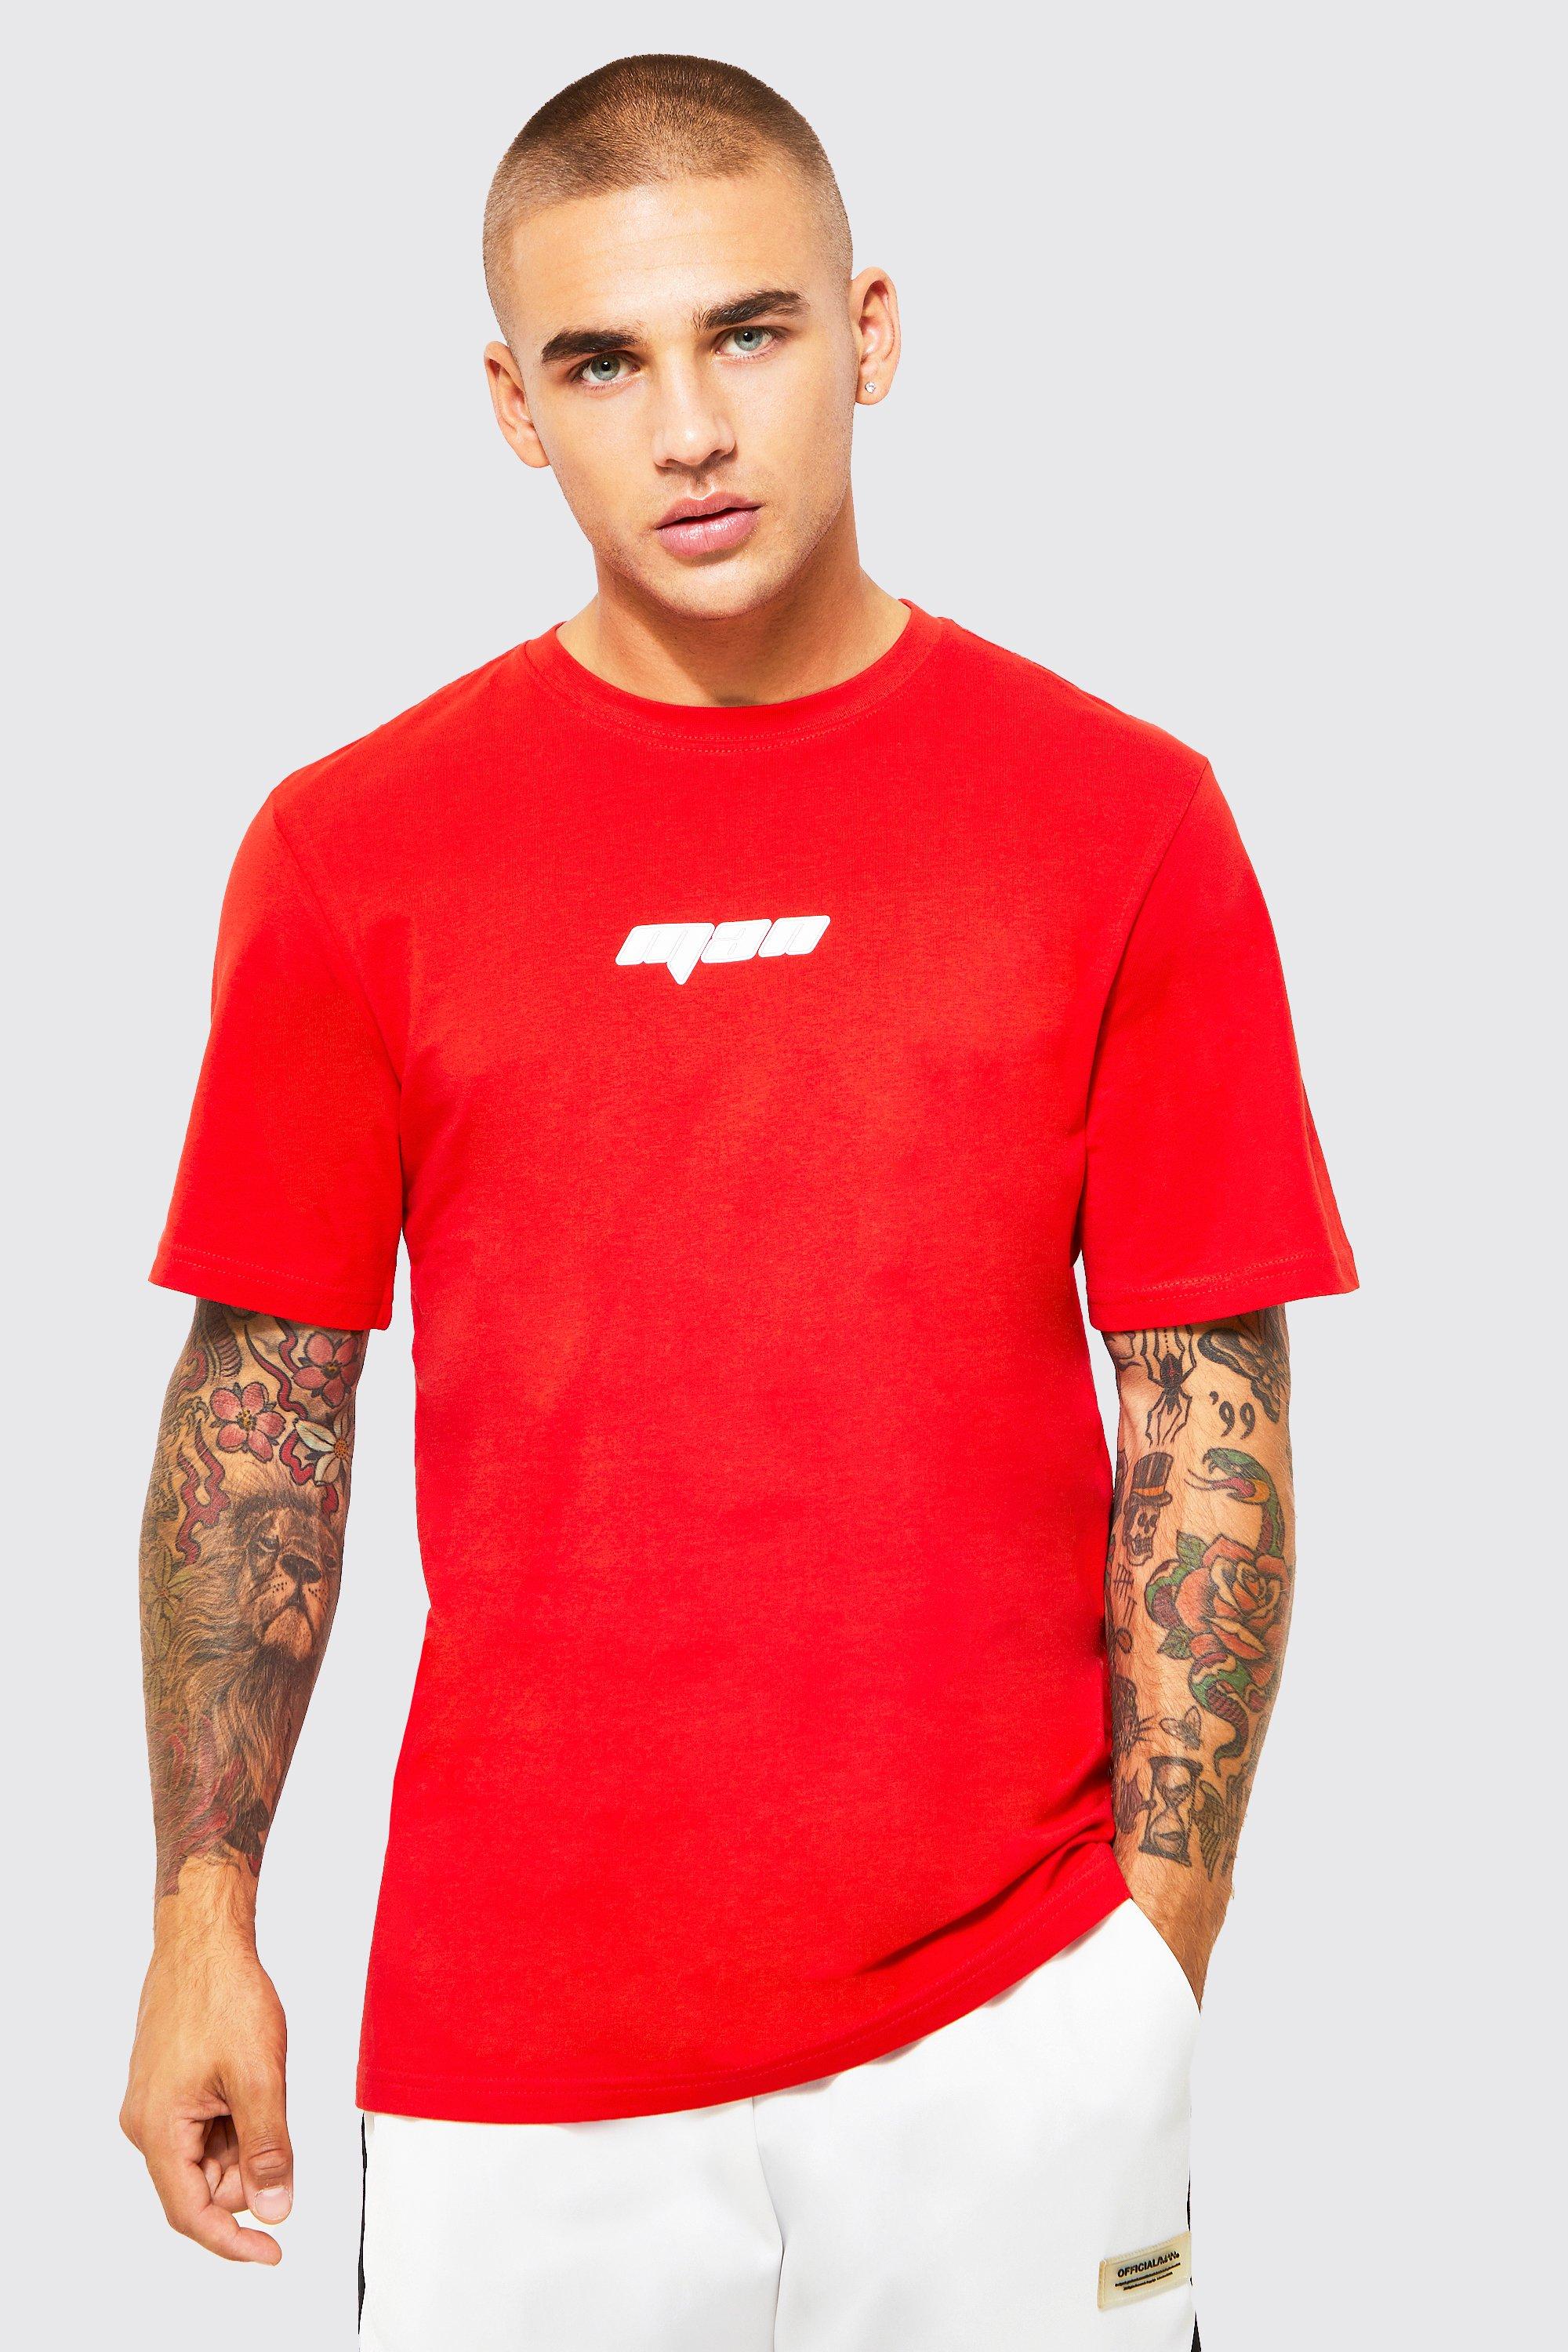 men's man chest slogan graphic t-shirt - red - xl, red